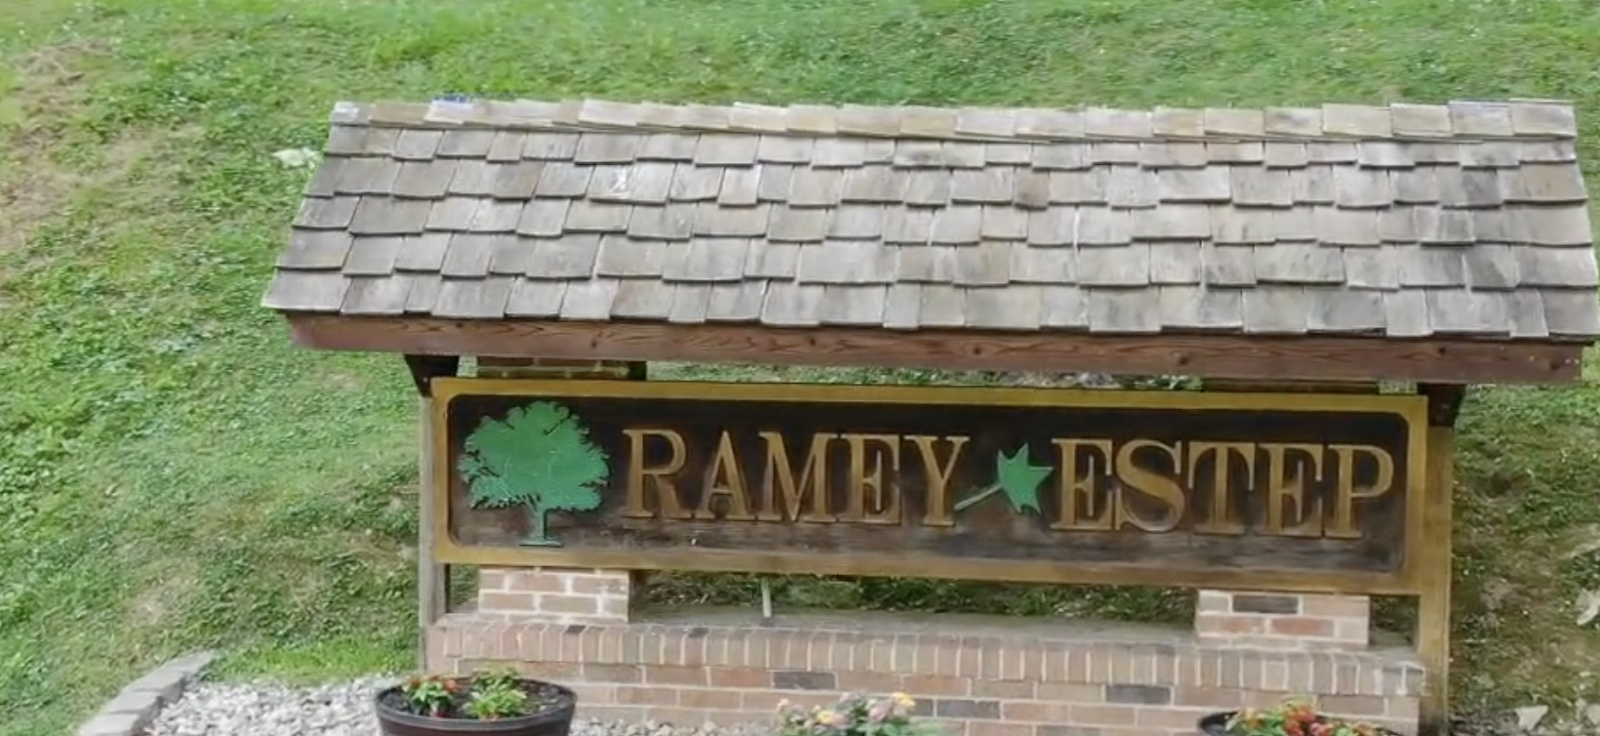 Ramey Estep Homes - Group Residential Recovery Program